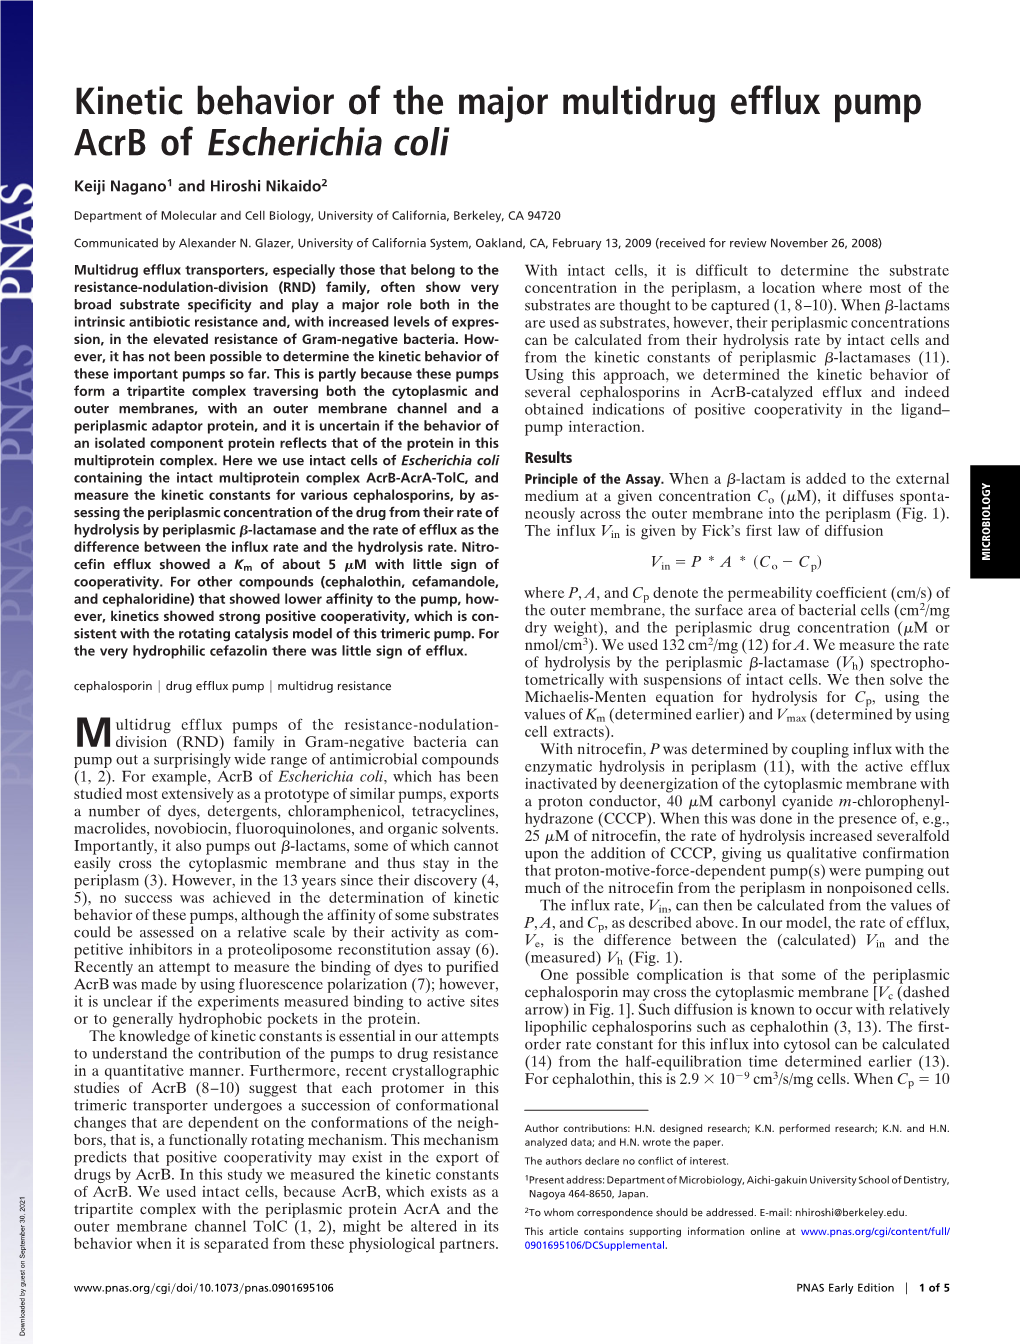 Kinetic Behavior of the Major Multidrug Efflux Pump Acrb of Escherichia Coli